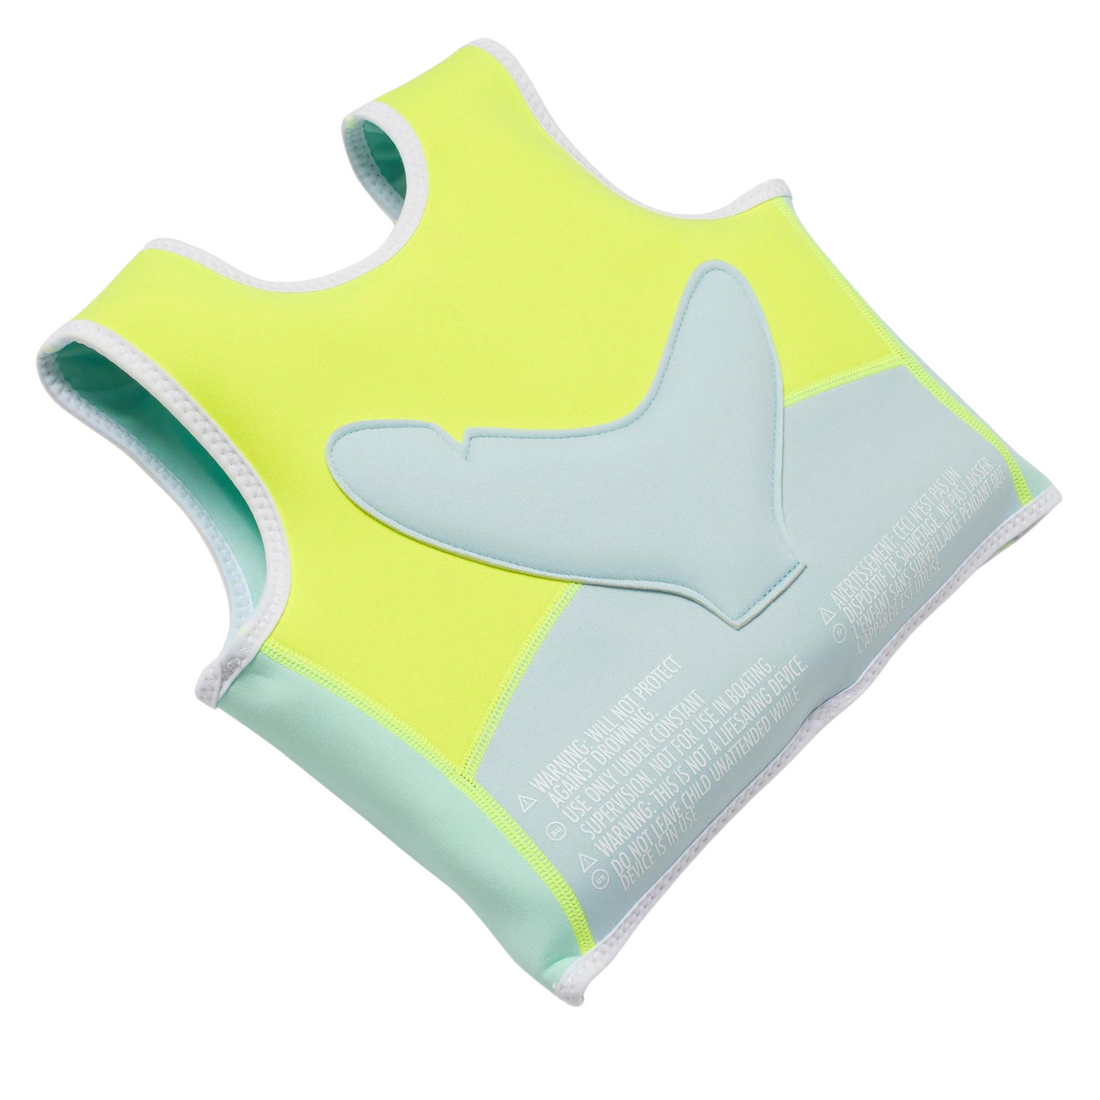 Plaukimo liemenė - Neon Yellow